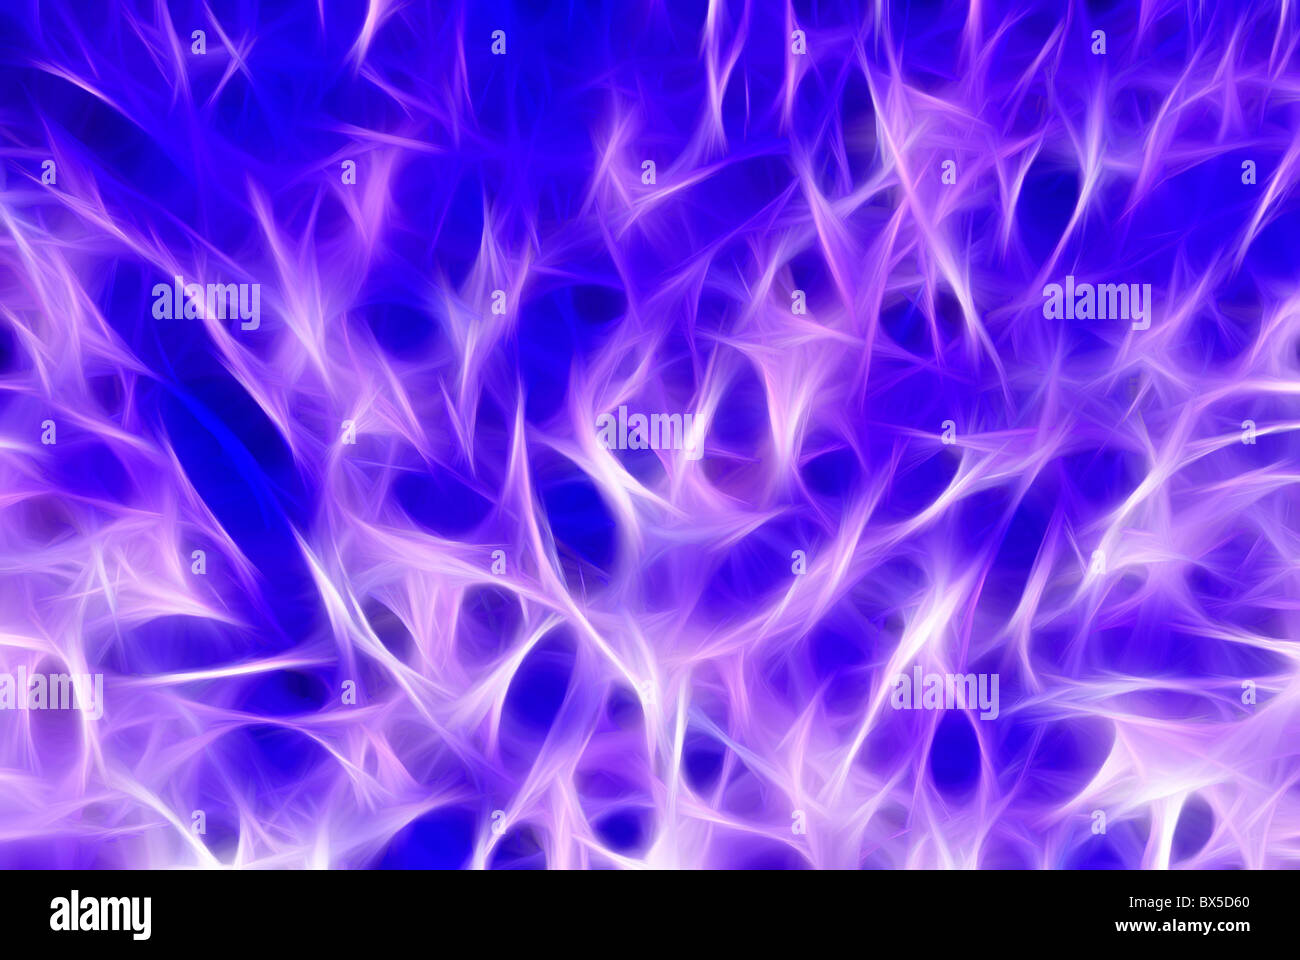 Purple Flame Images  Free Download on Freepik